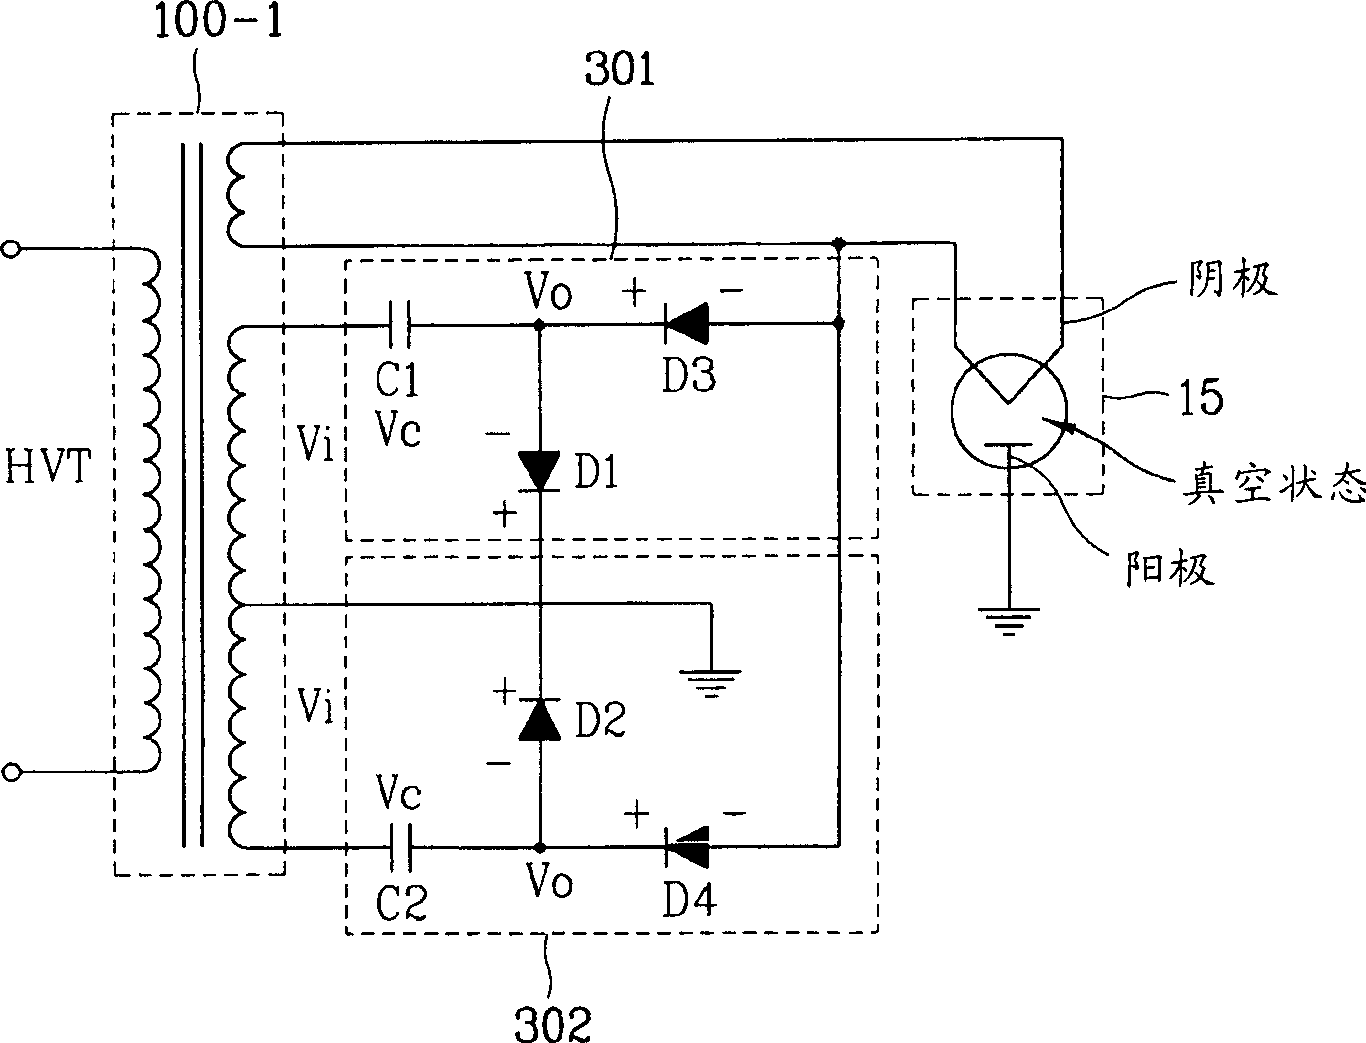 Power supply equipment of illuminating system using microwave